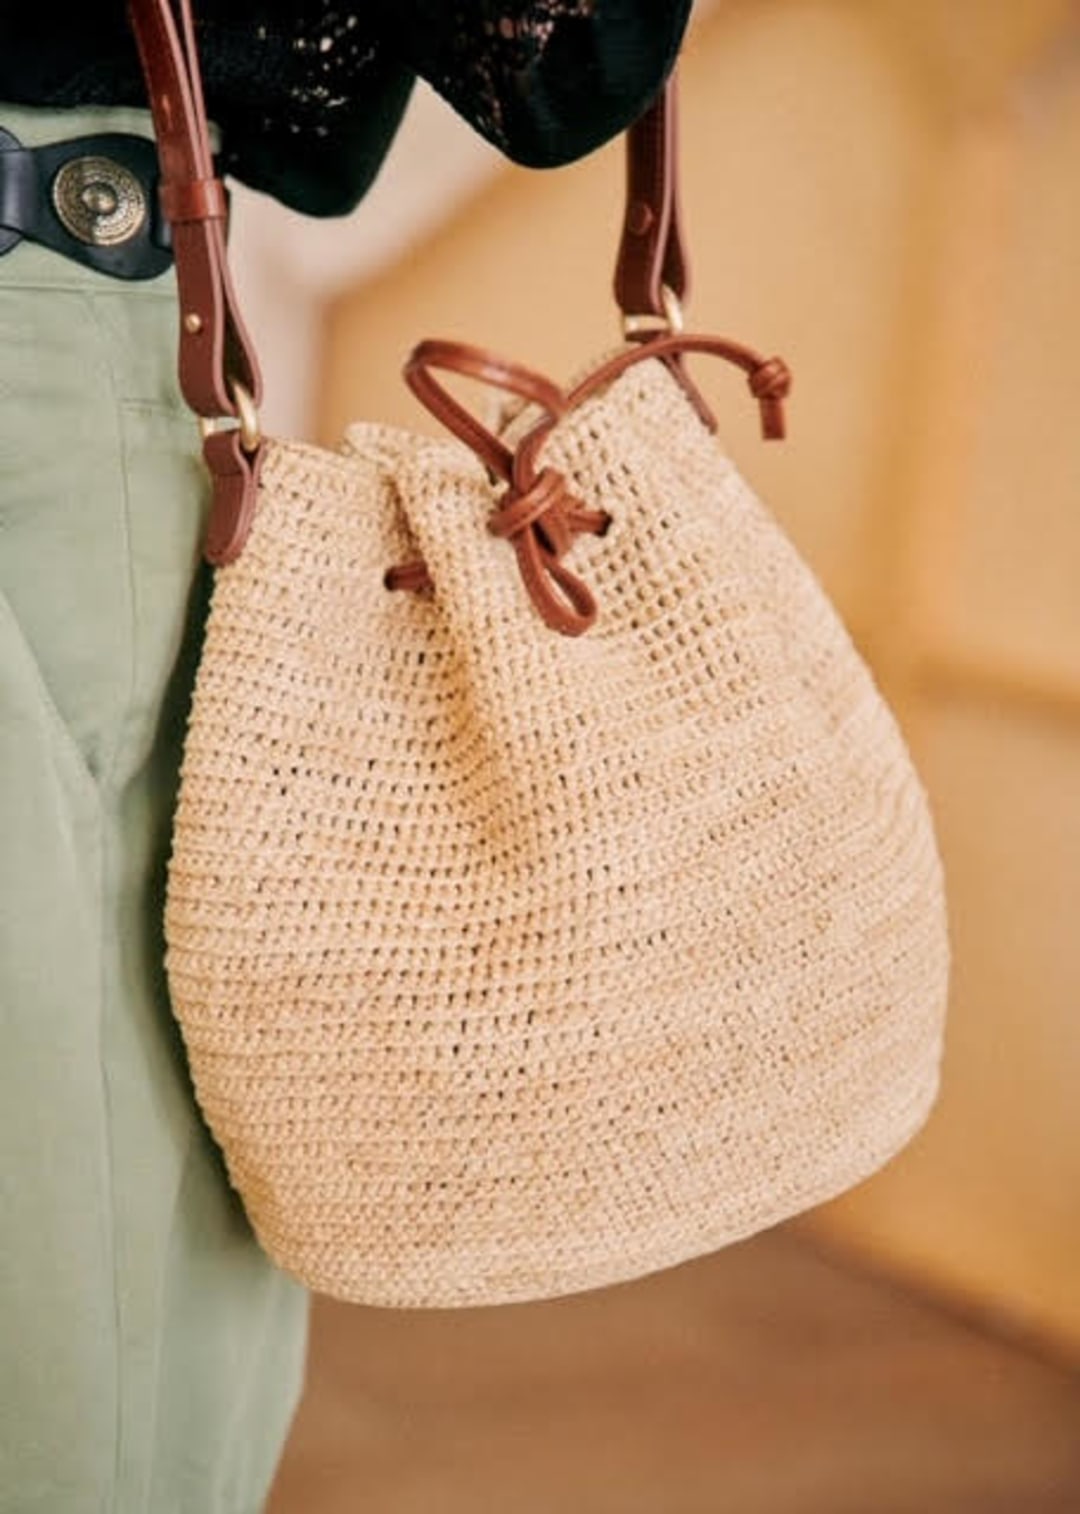 Sezane Lola Bucket Bag Review ⋆ chic everywhere